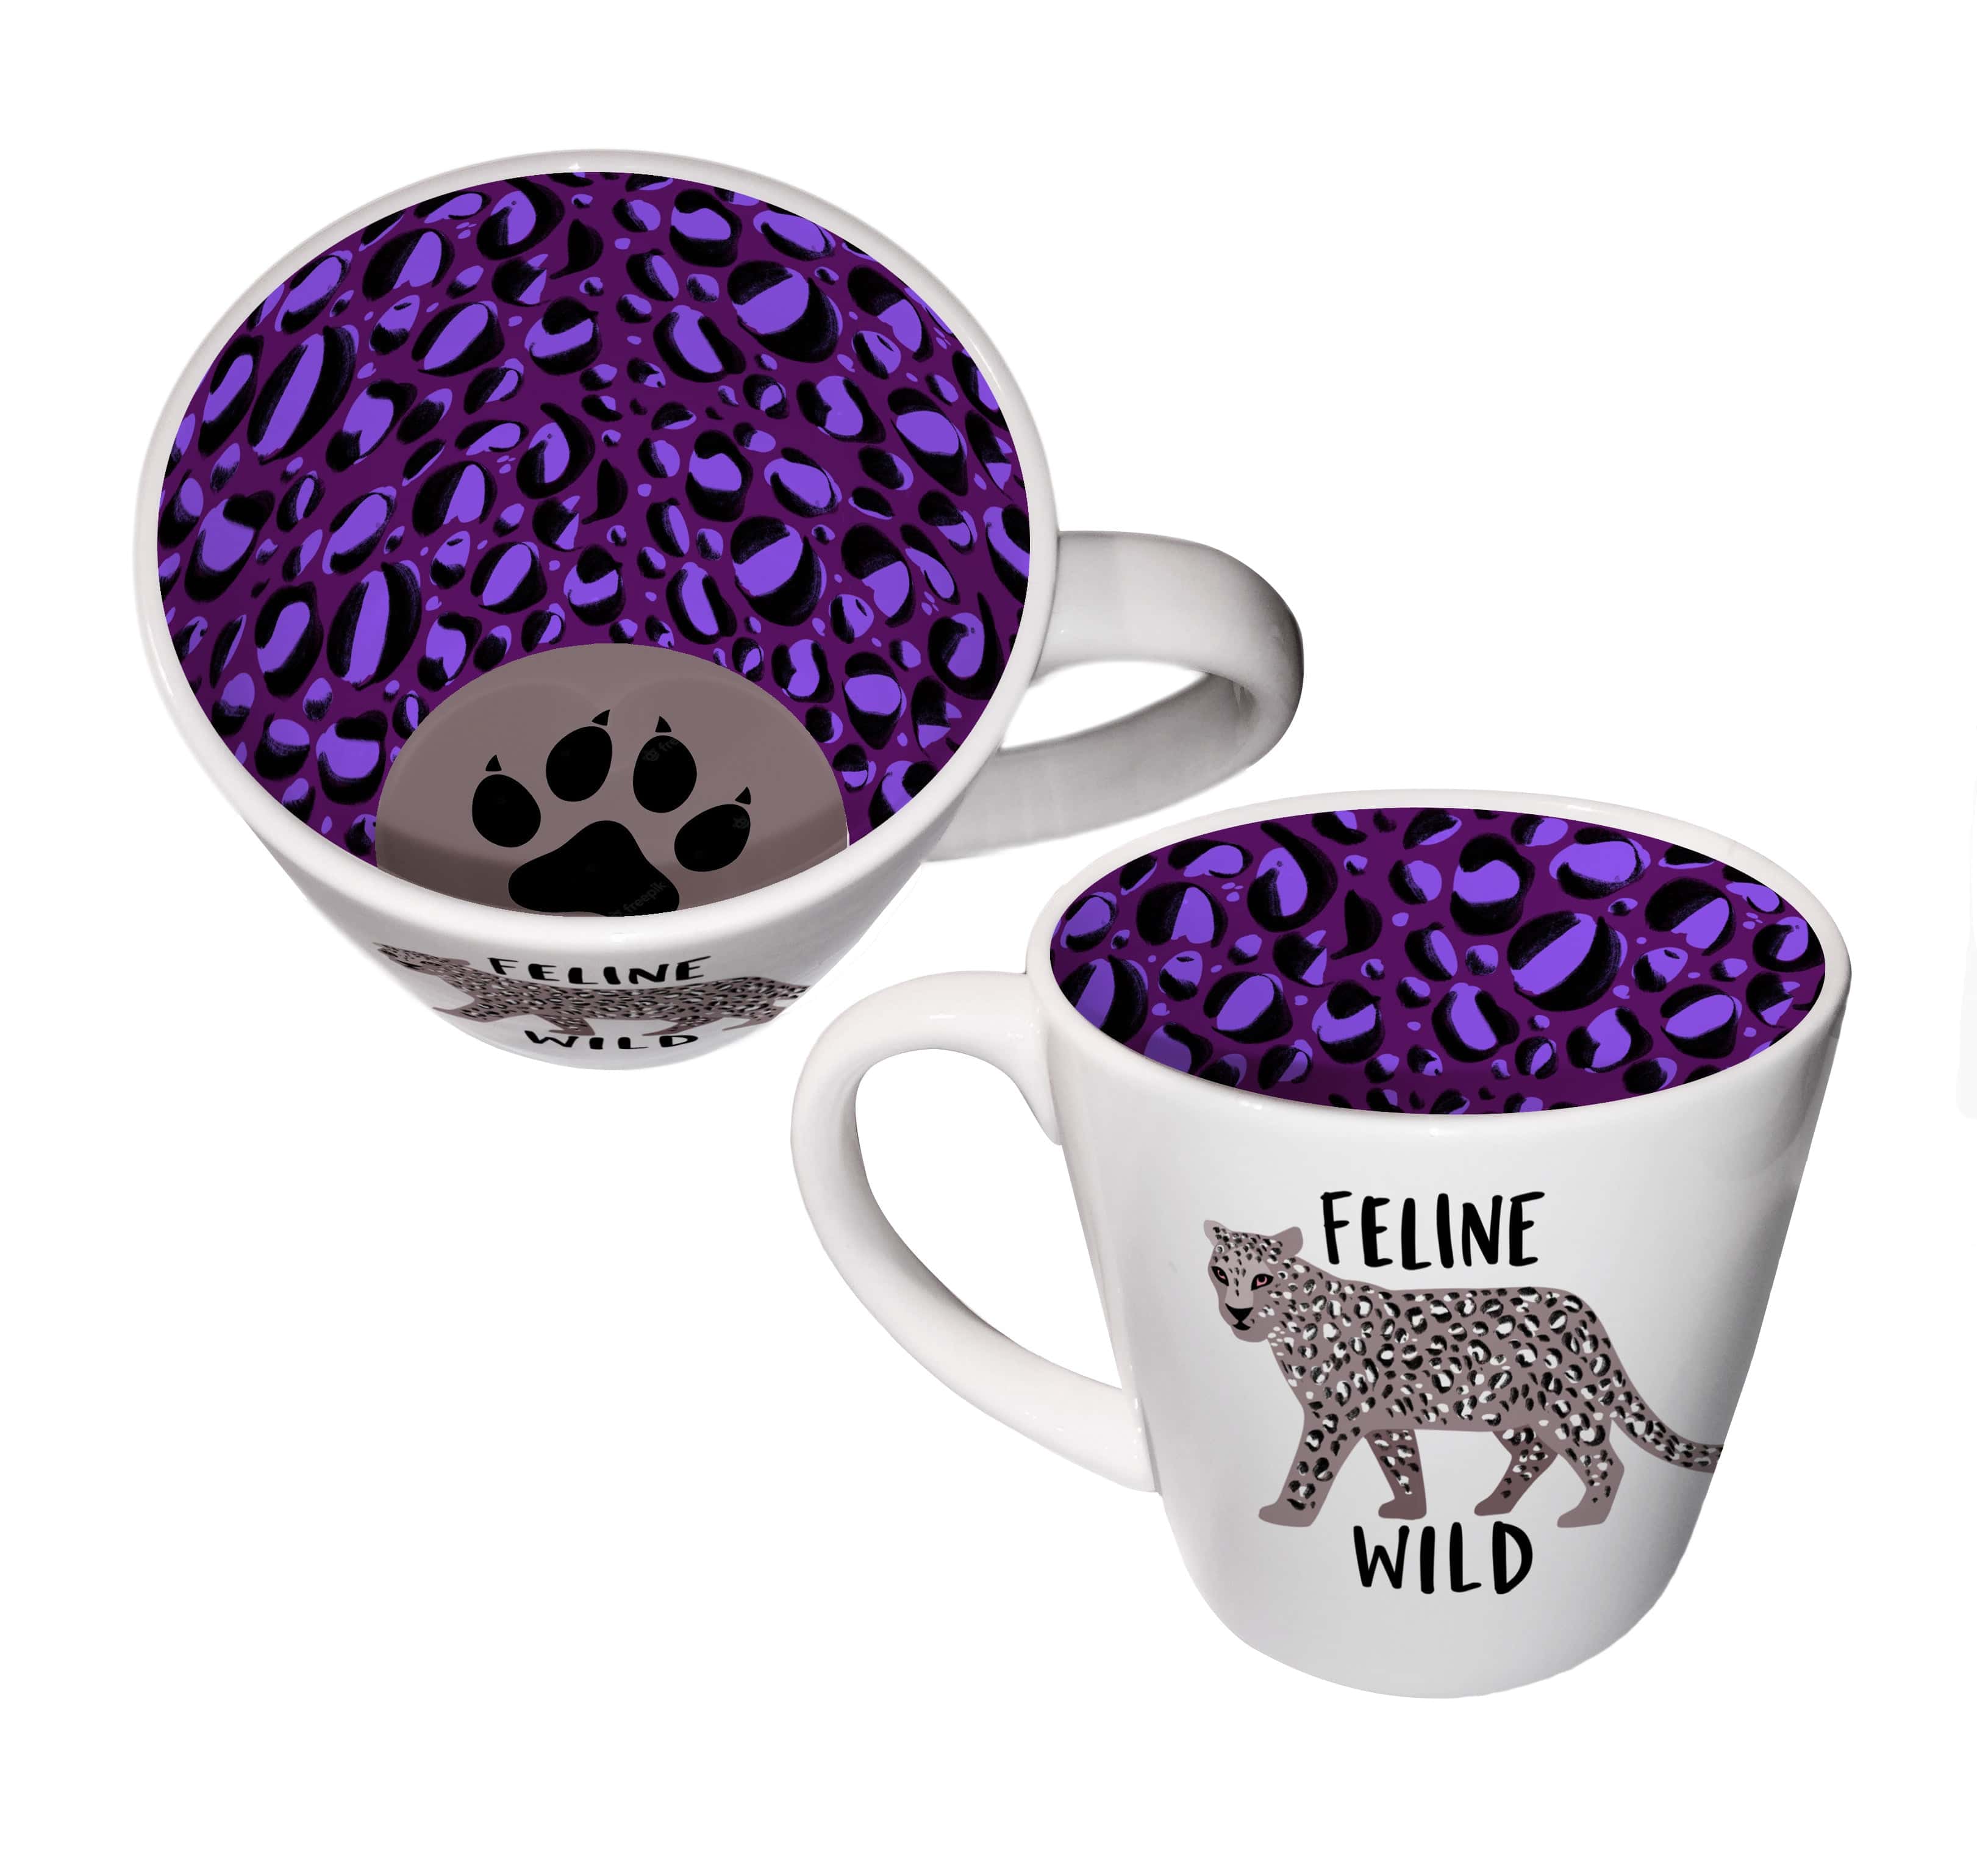 WPL Gifts Mug Inside Out Mug With Gift Box - Feline Wild